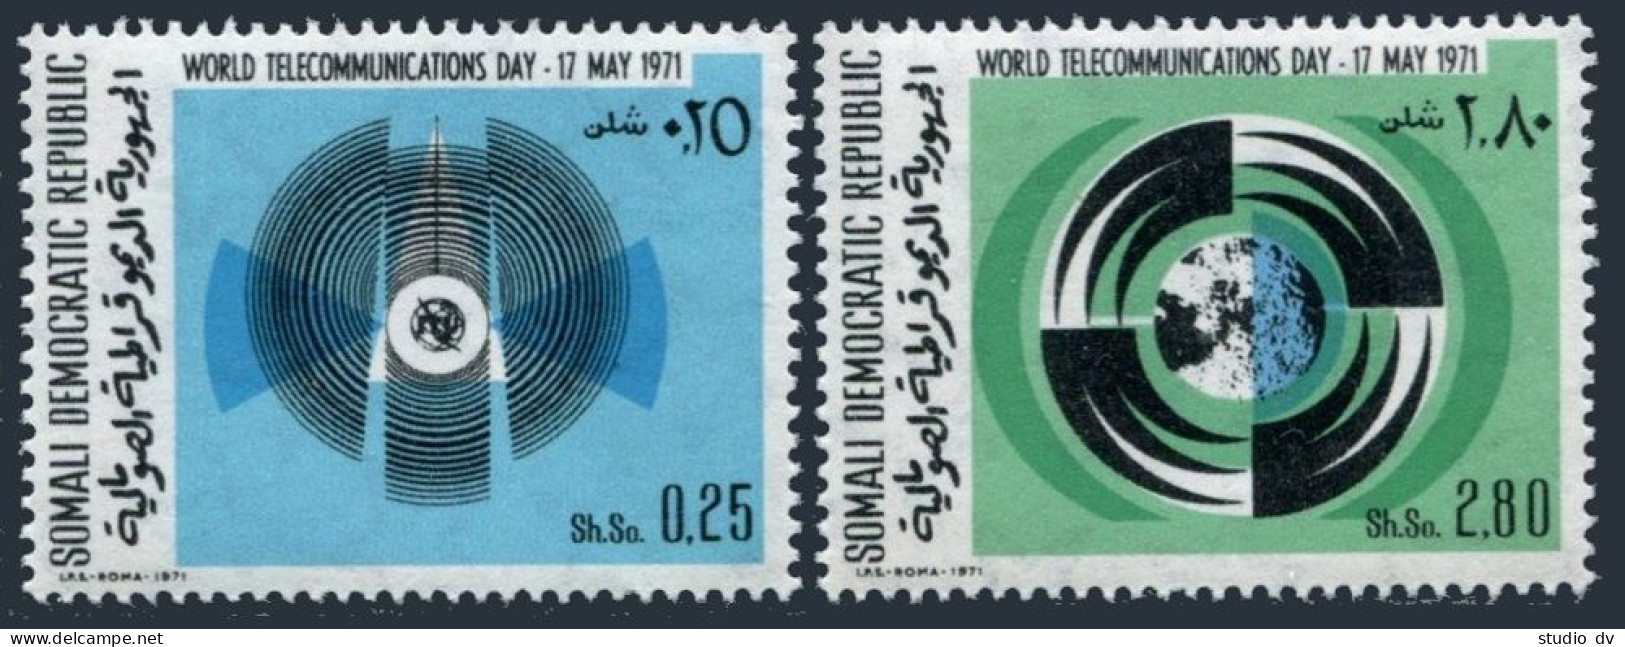 Somalia 370-371, MNH. Michel 172-173. World Telecommunications Day, 1971. Waves. - Somalie (1960-...)